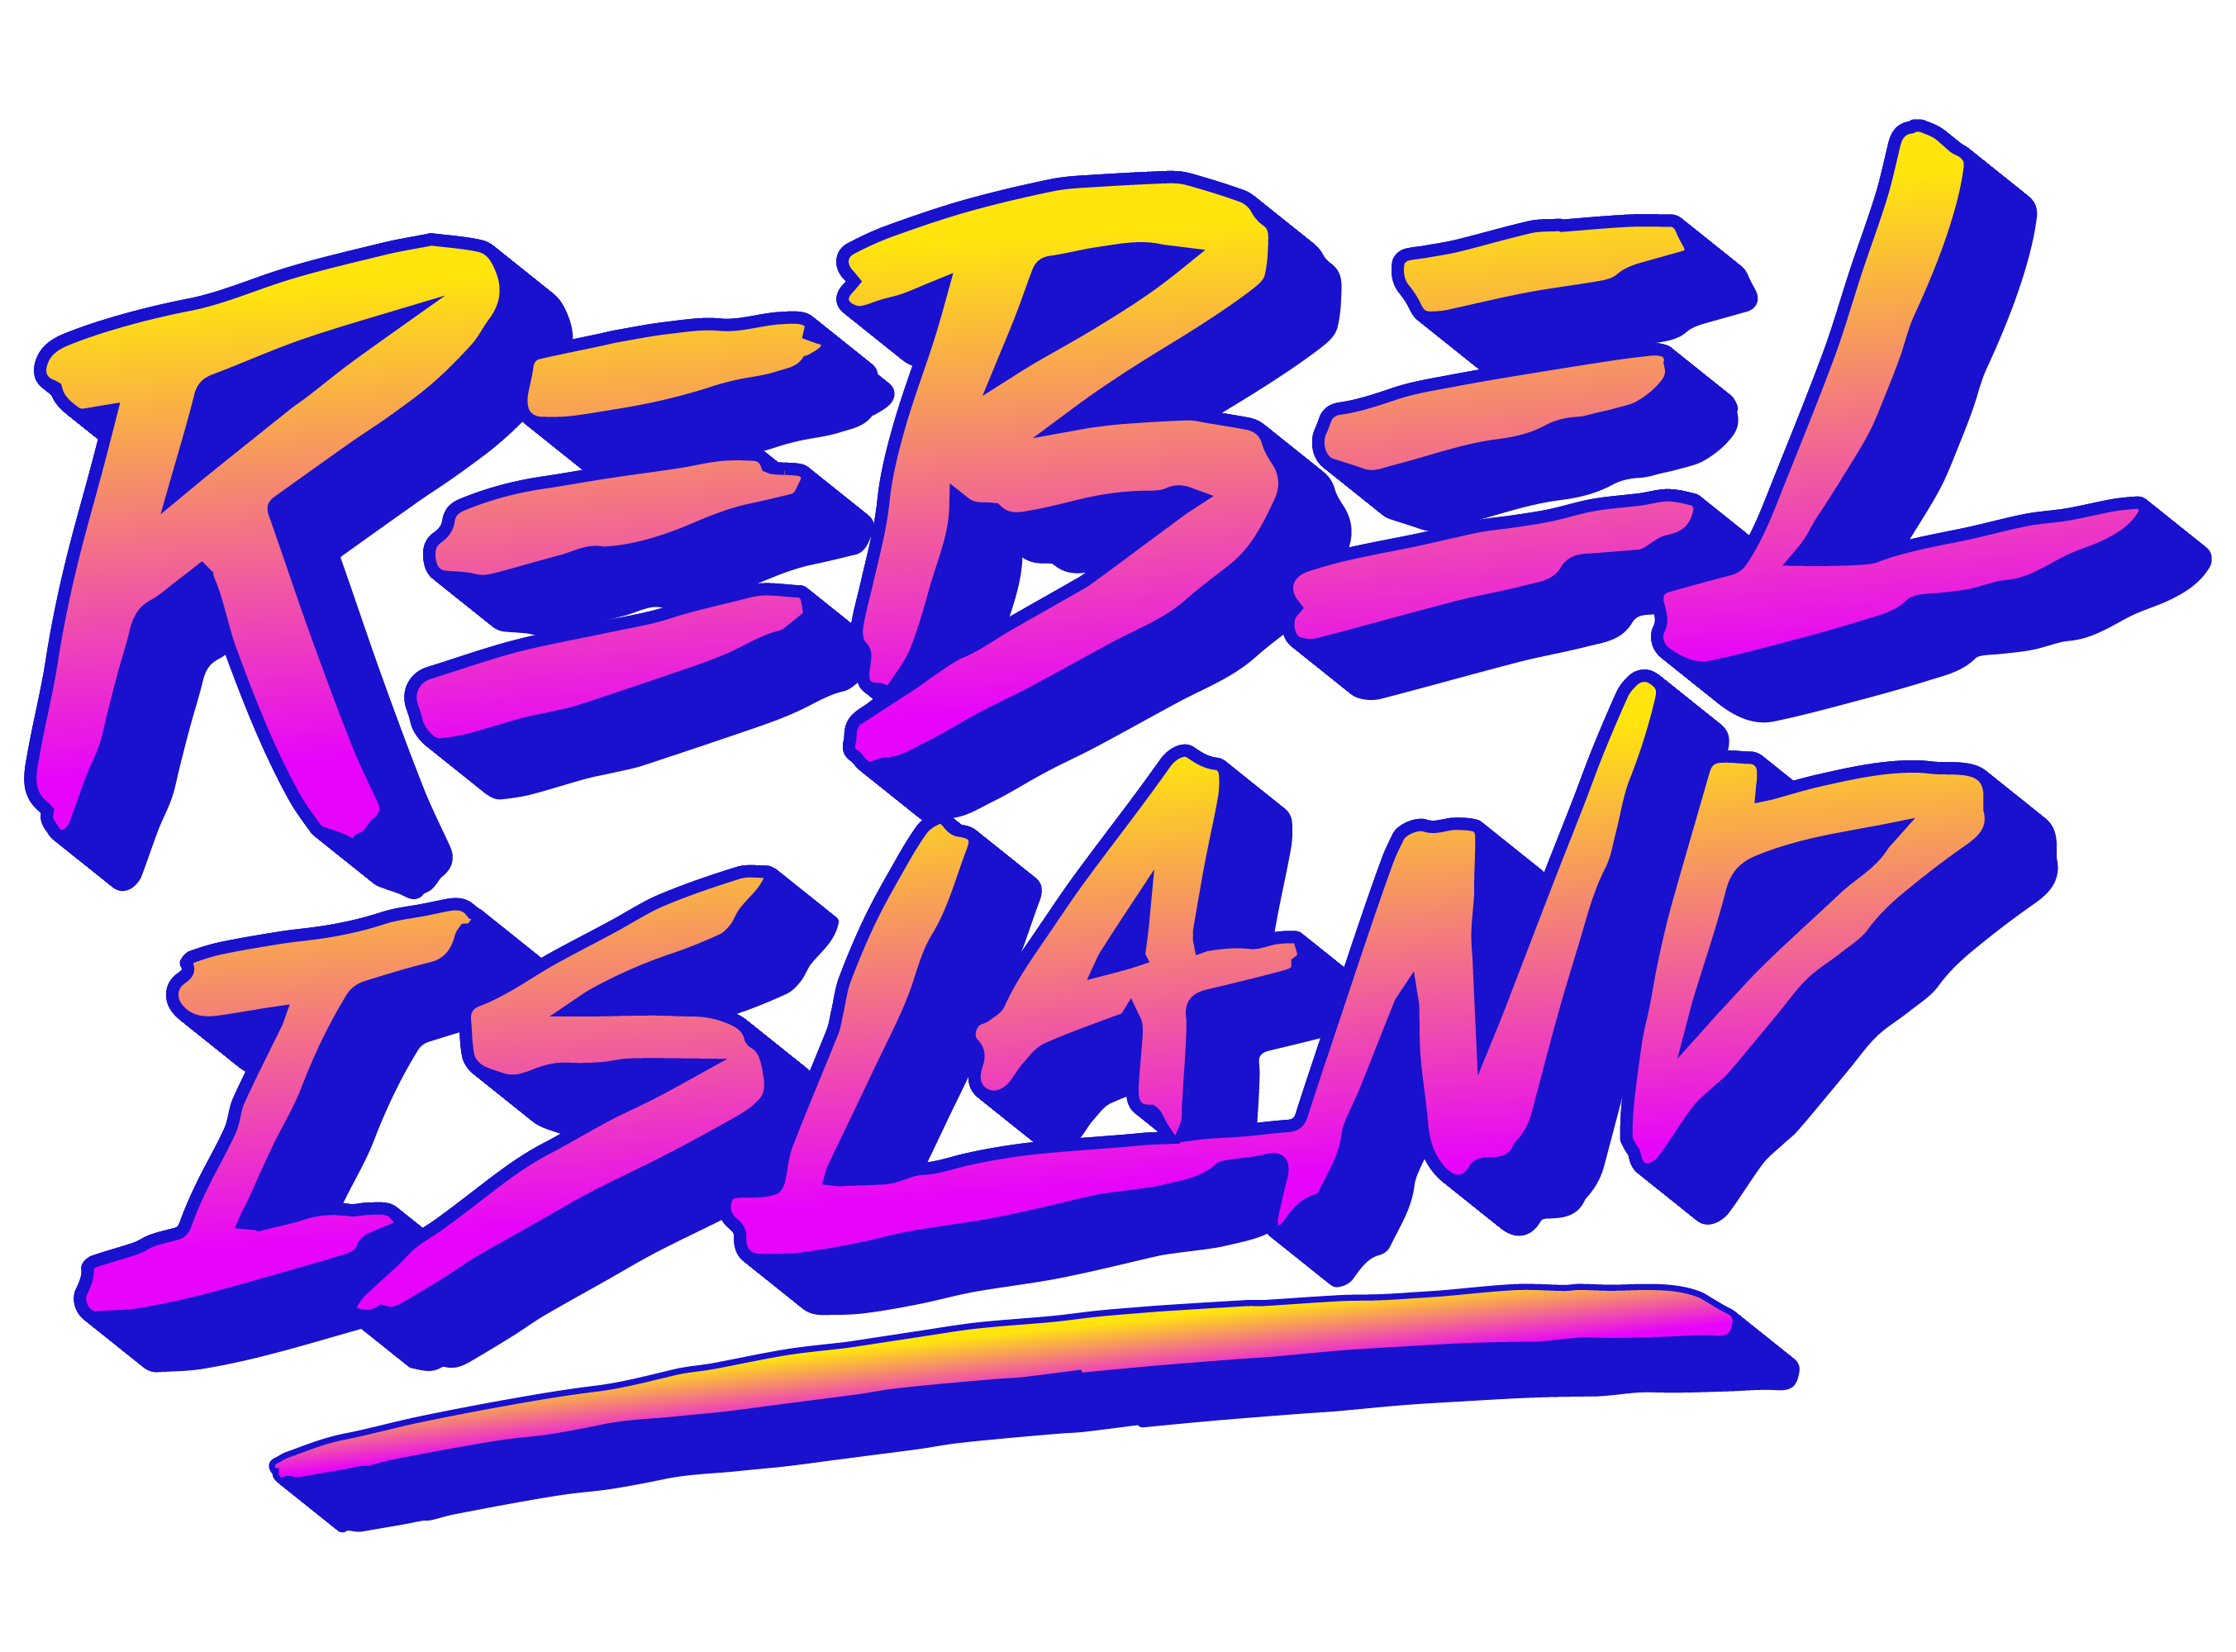 REBEL ISLAND